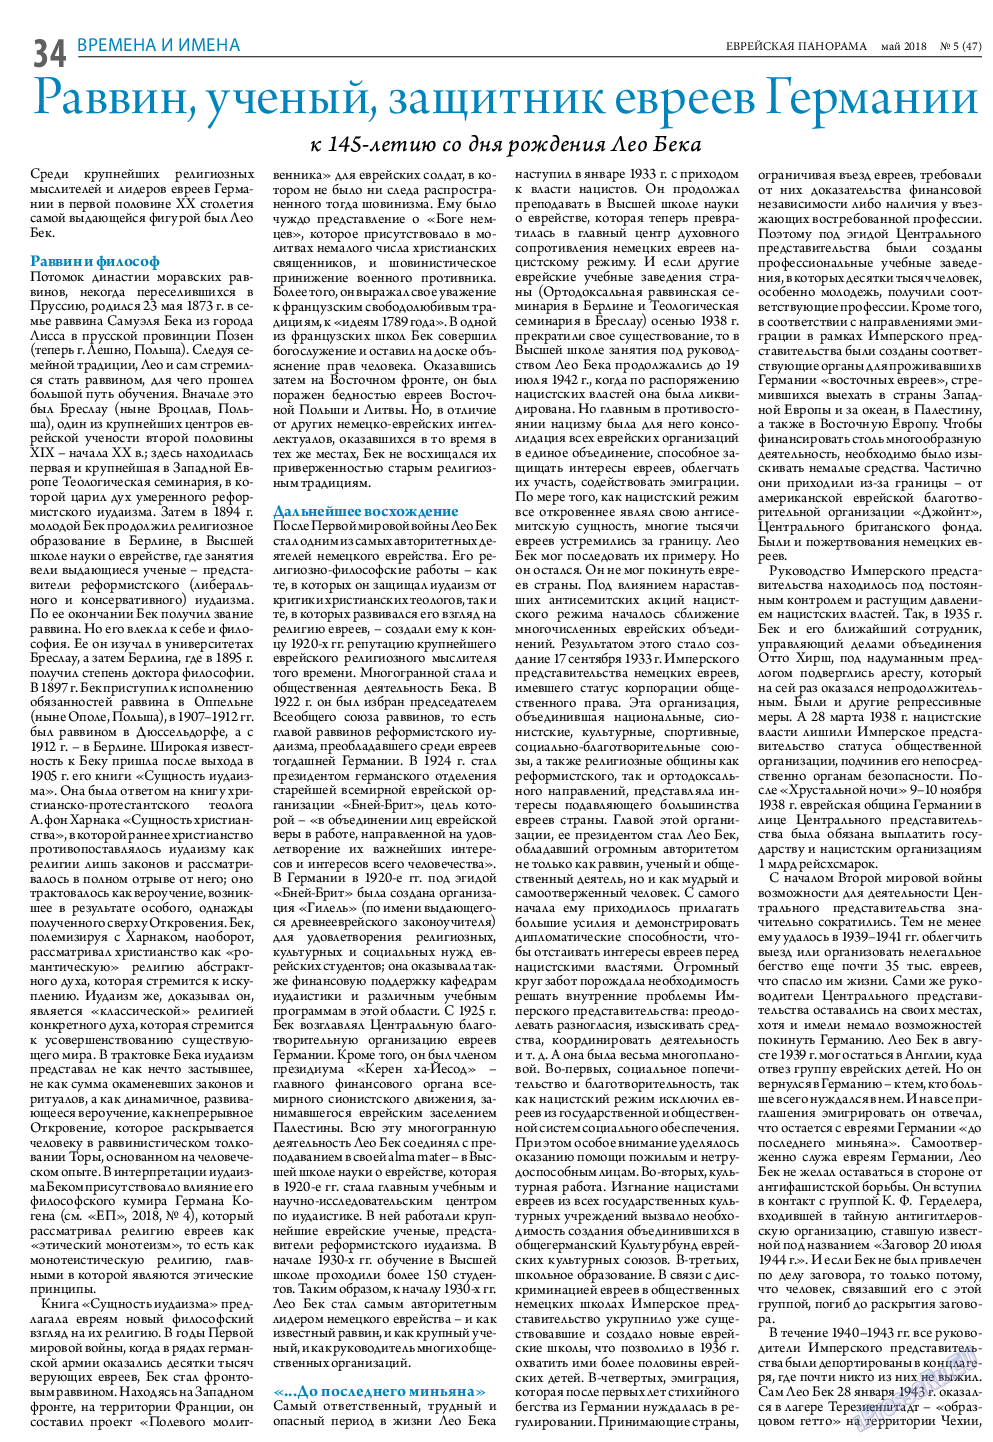 Еврейская панорама, газета. 2018 №5 стр.34